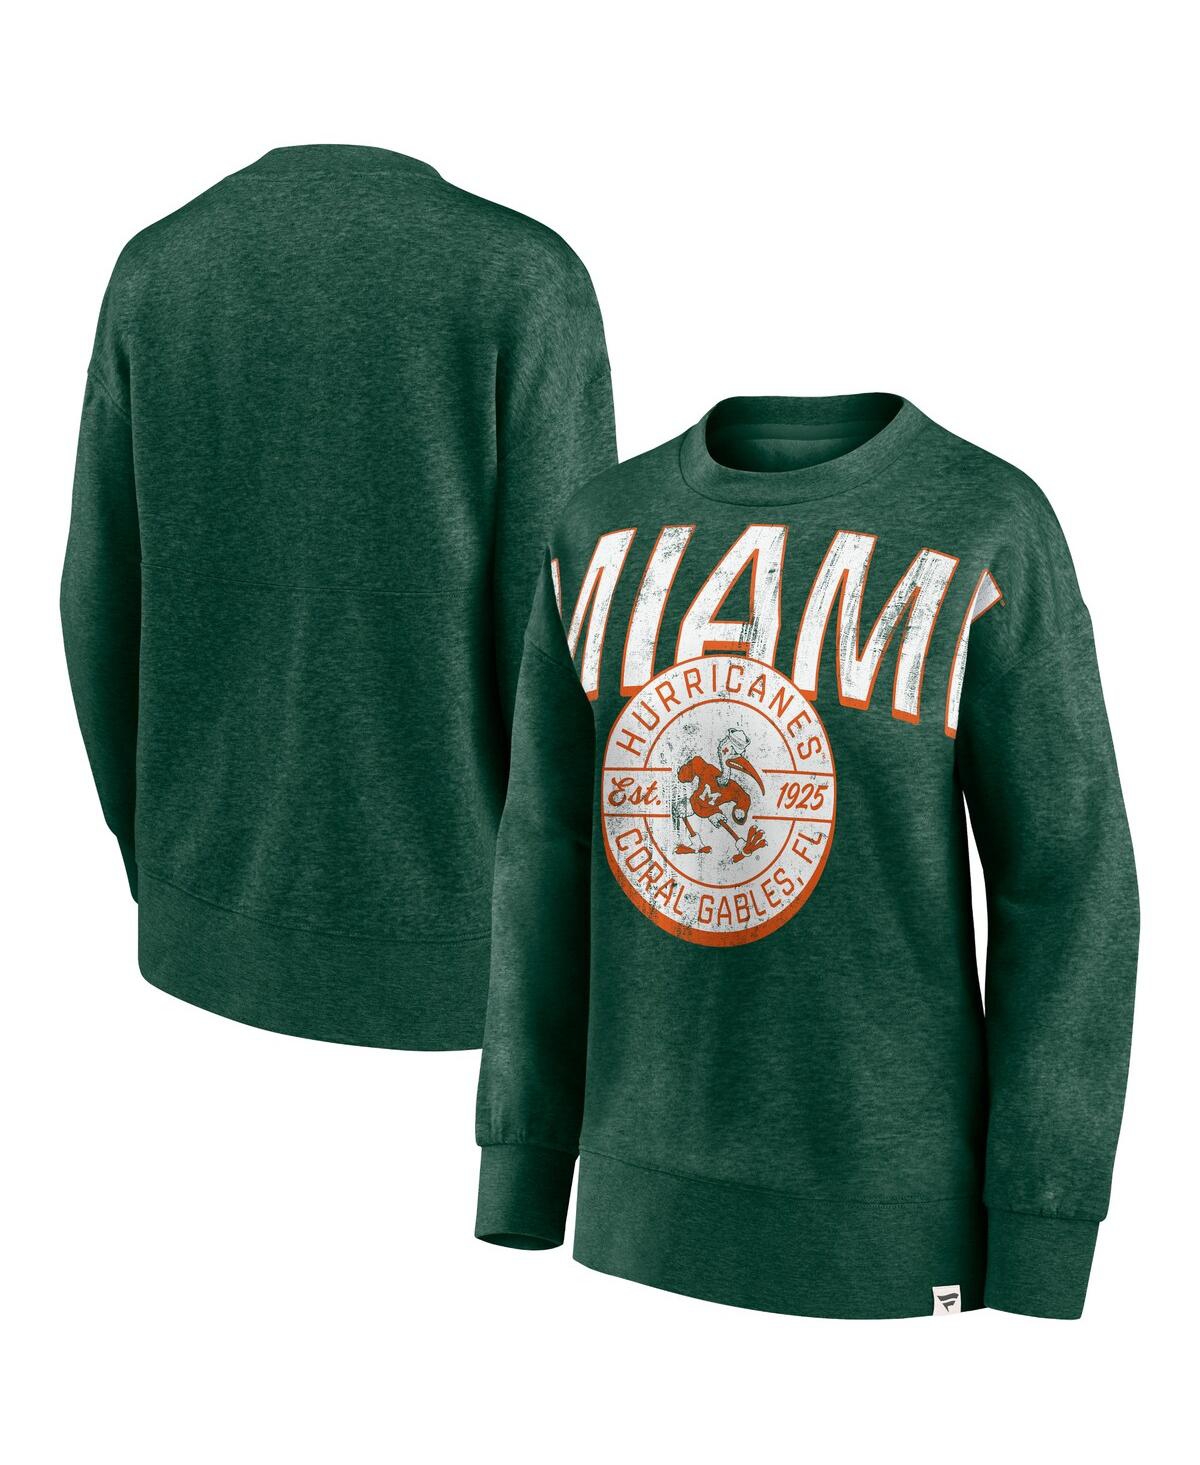 Fanatics Branded Women's Heathered Green Miami Hurricanes Jump Distribution Pullover Sweatshirt